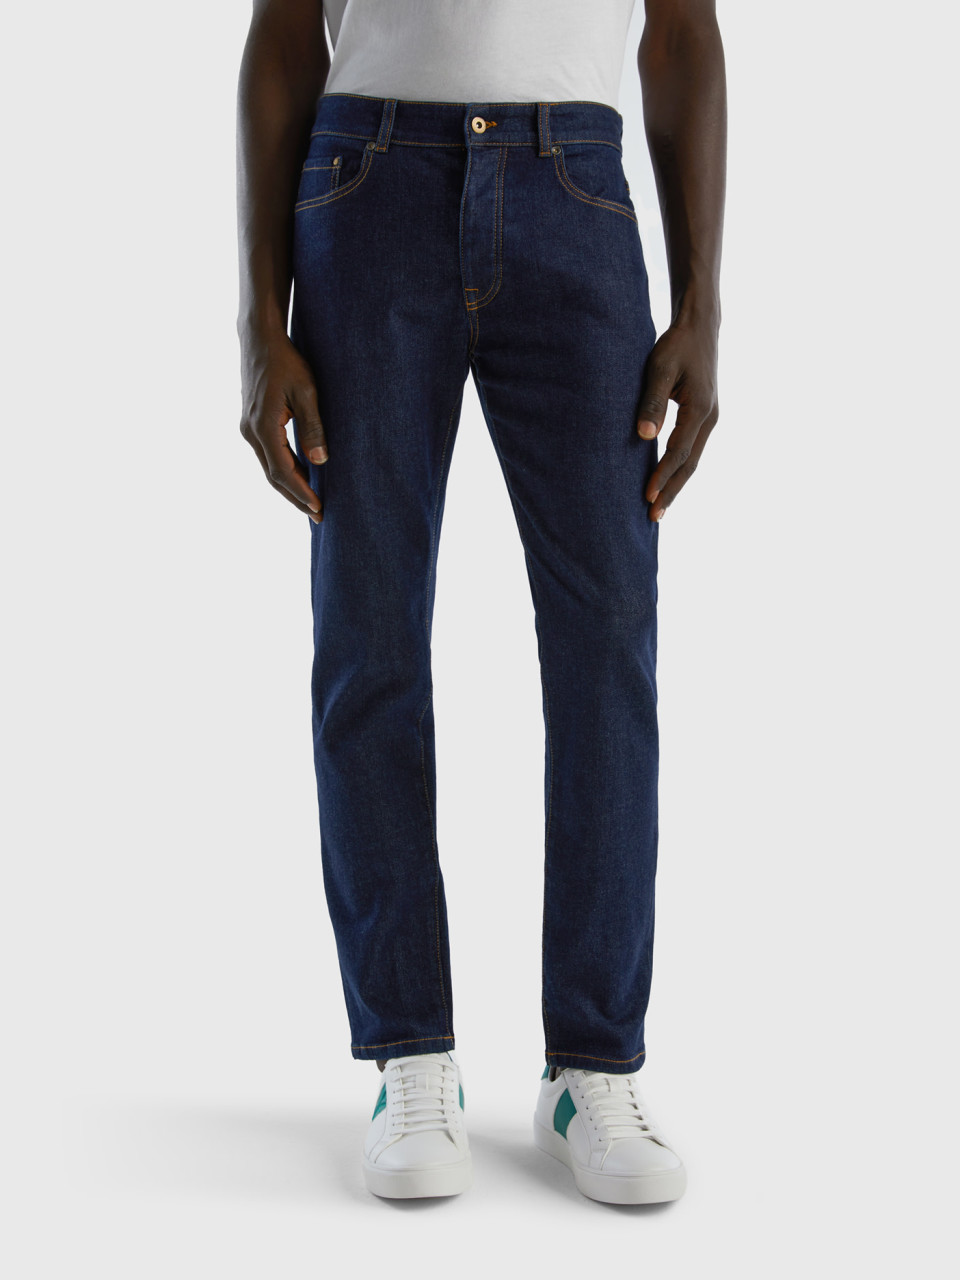 Benetton, Five Pocket Slim Fit Jeans, Dark Blue, Men